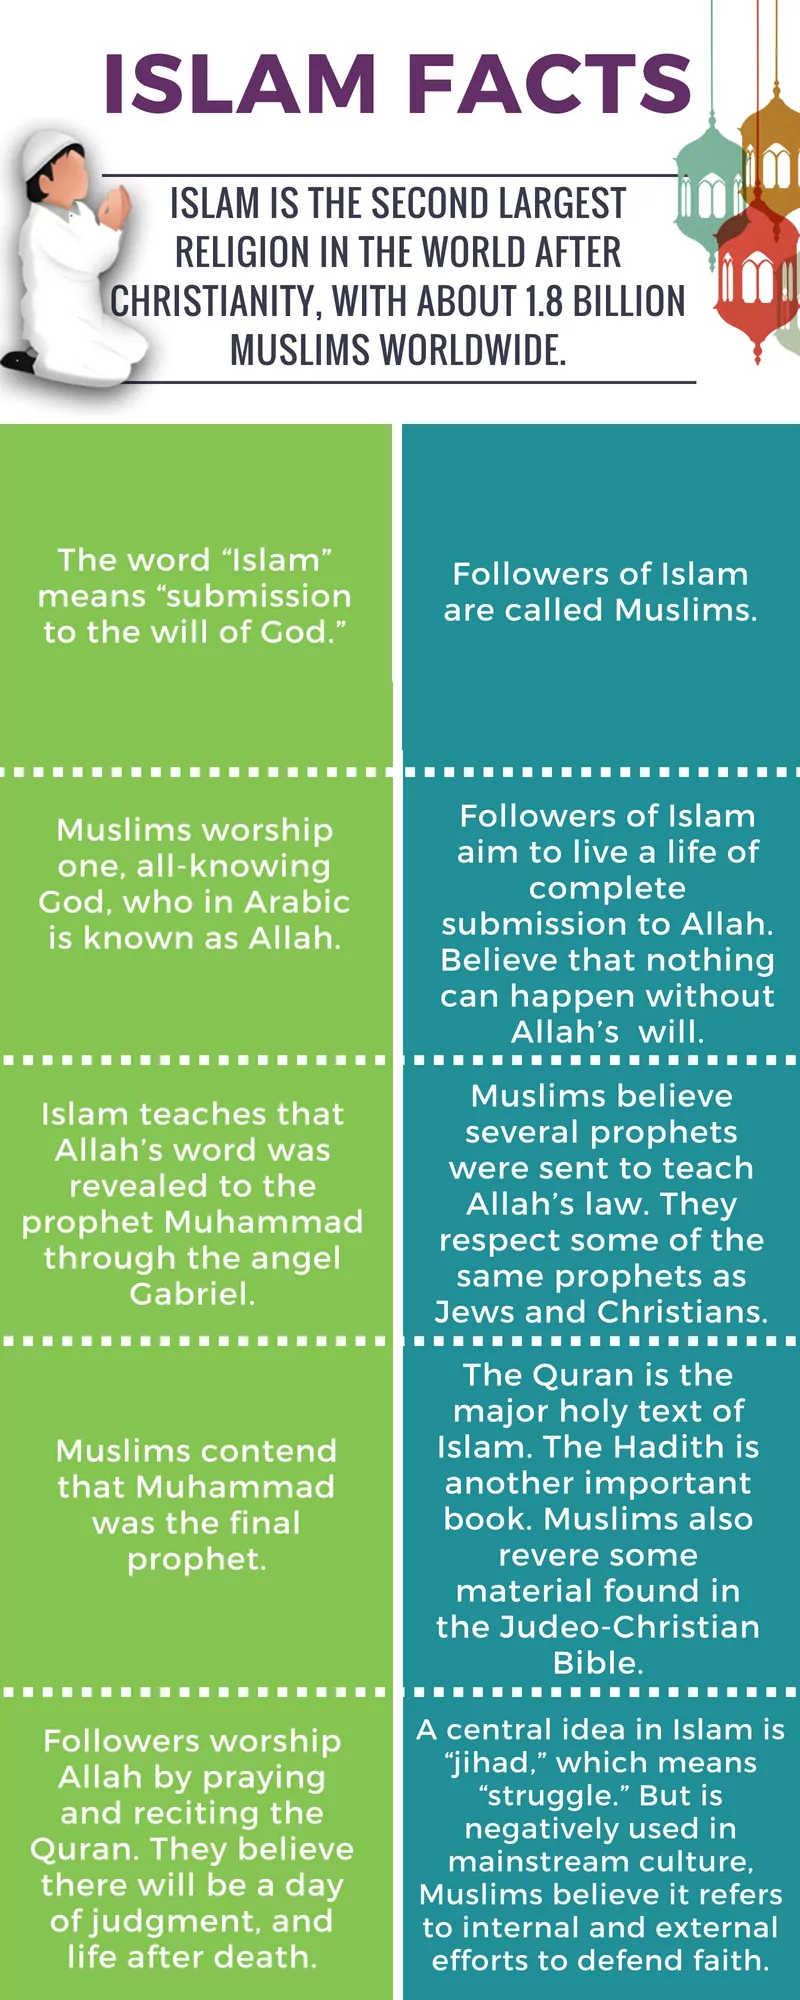 ISLAM FACTS